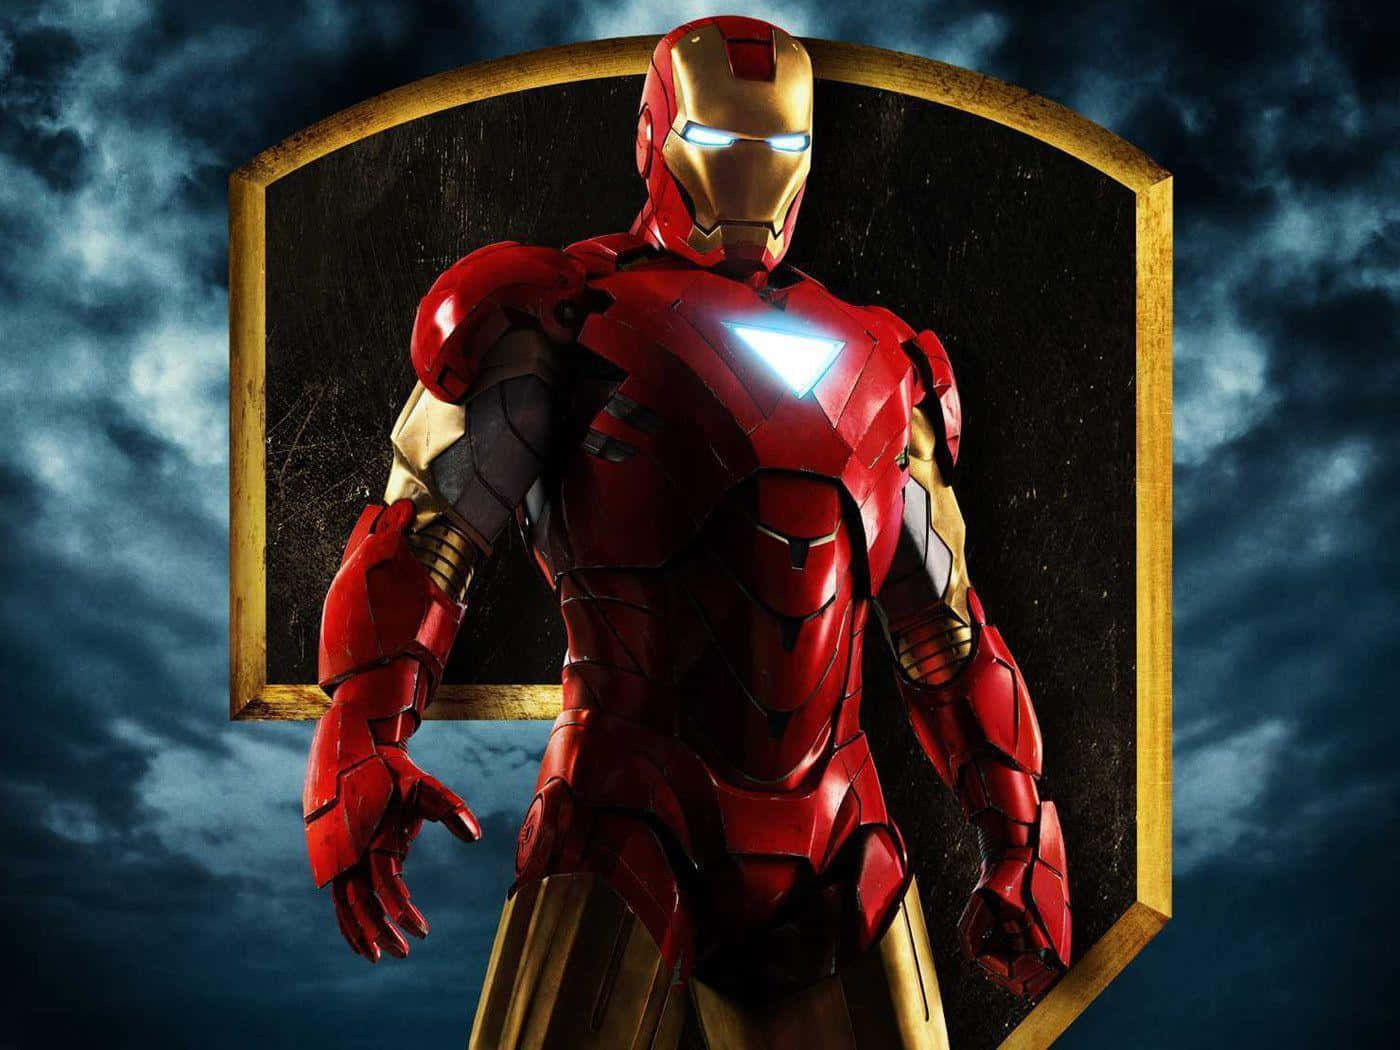 Iron Man2 Armored Hero Wallpaper